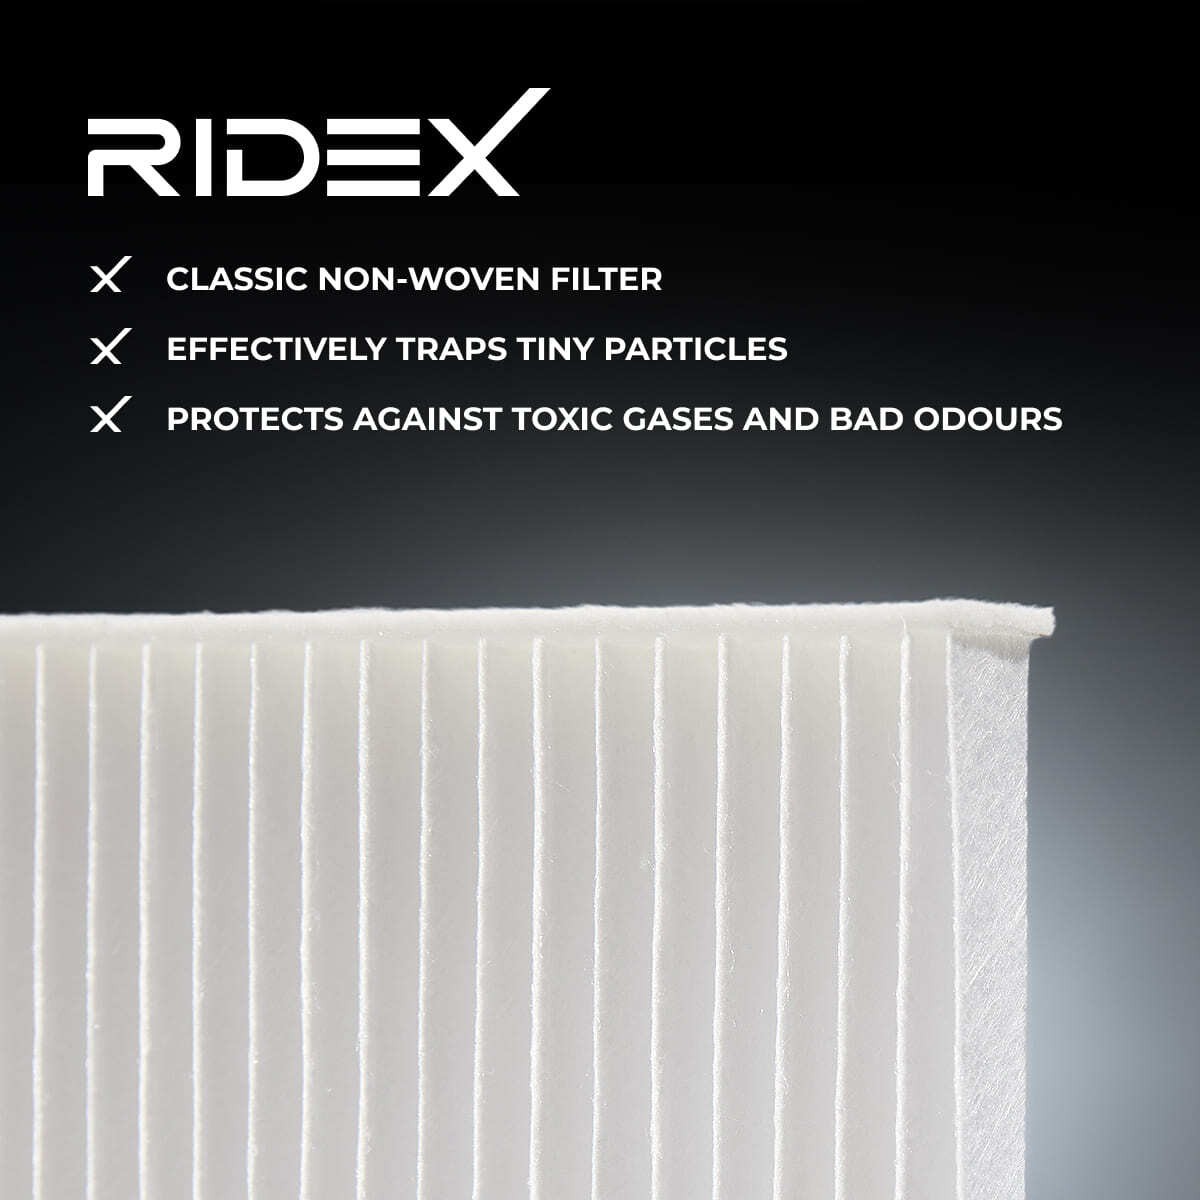 Pollen filter 424I0070 from RIDEX